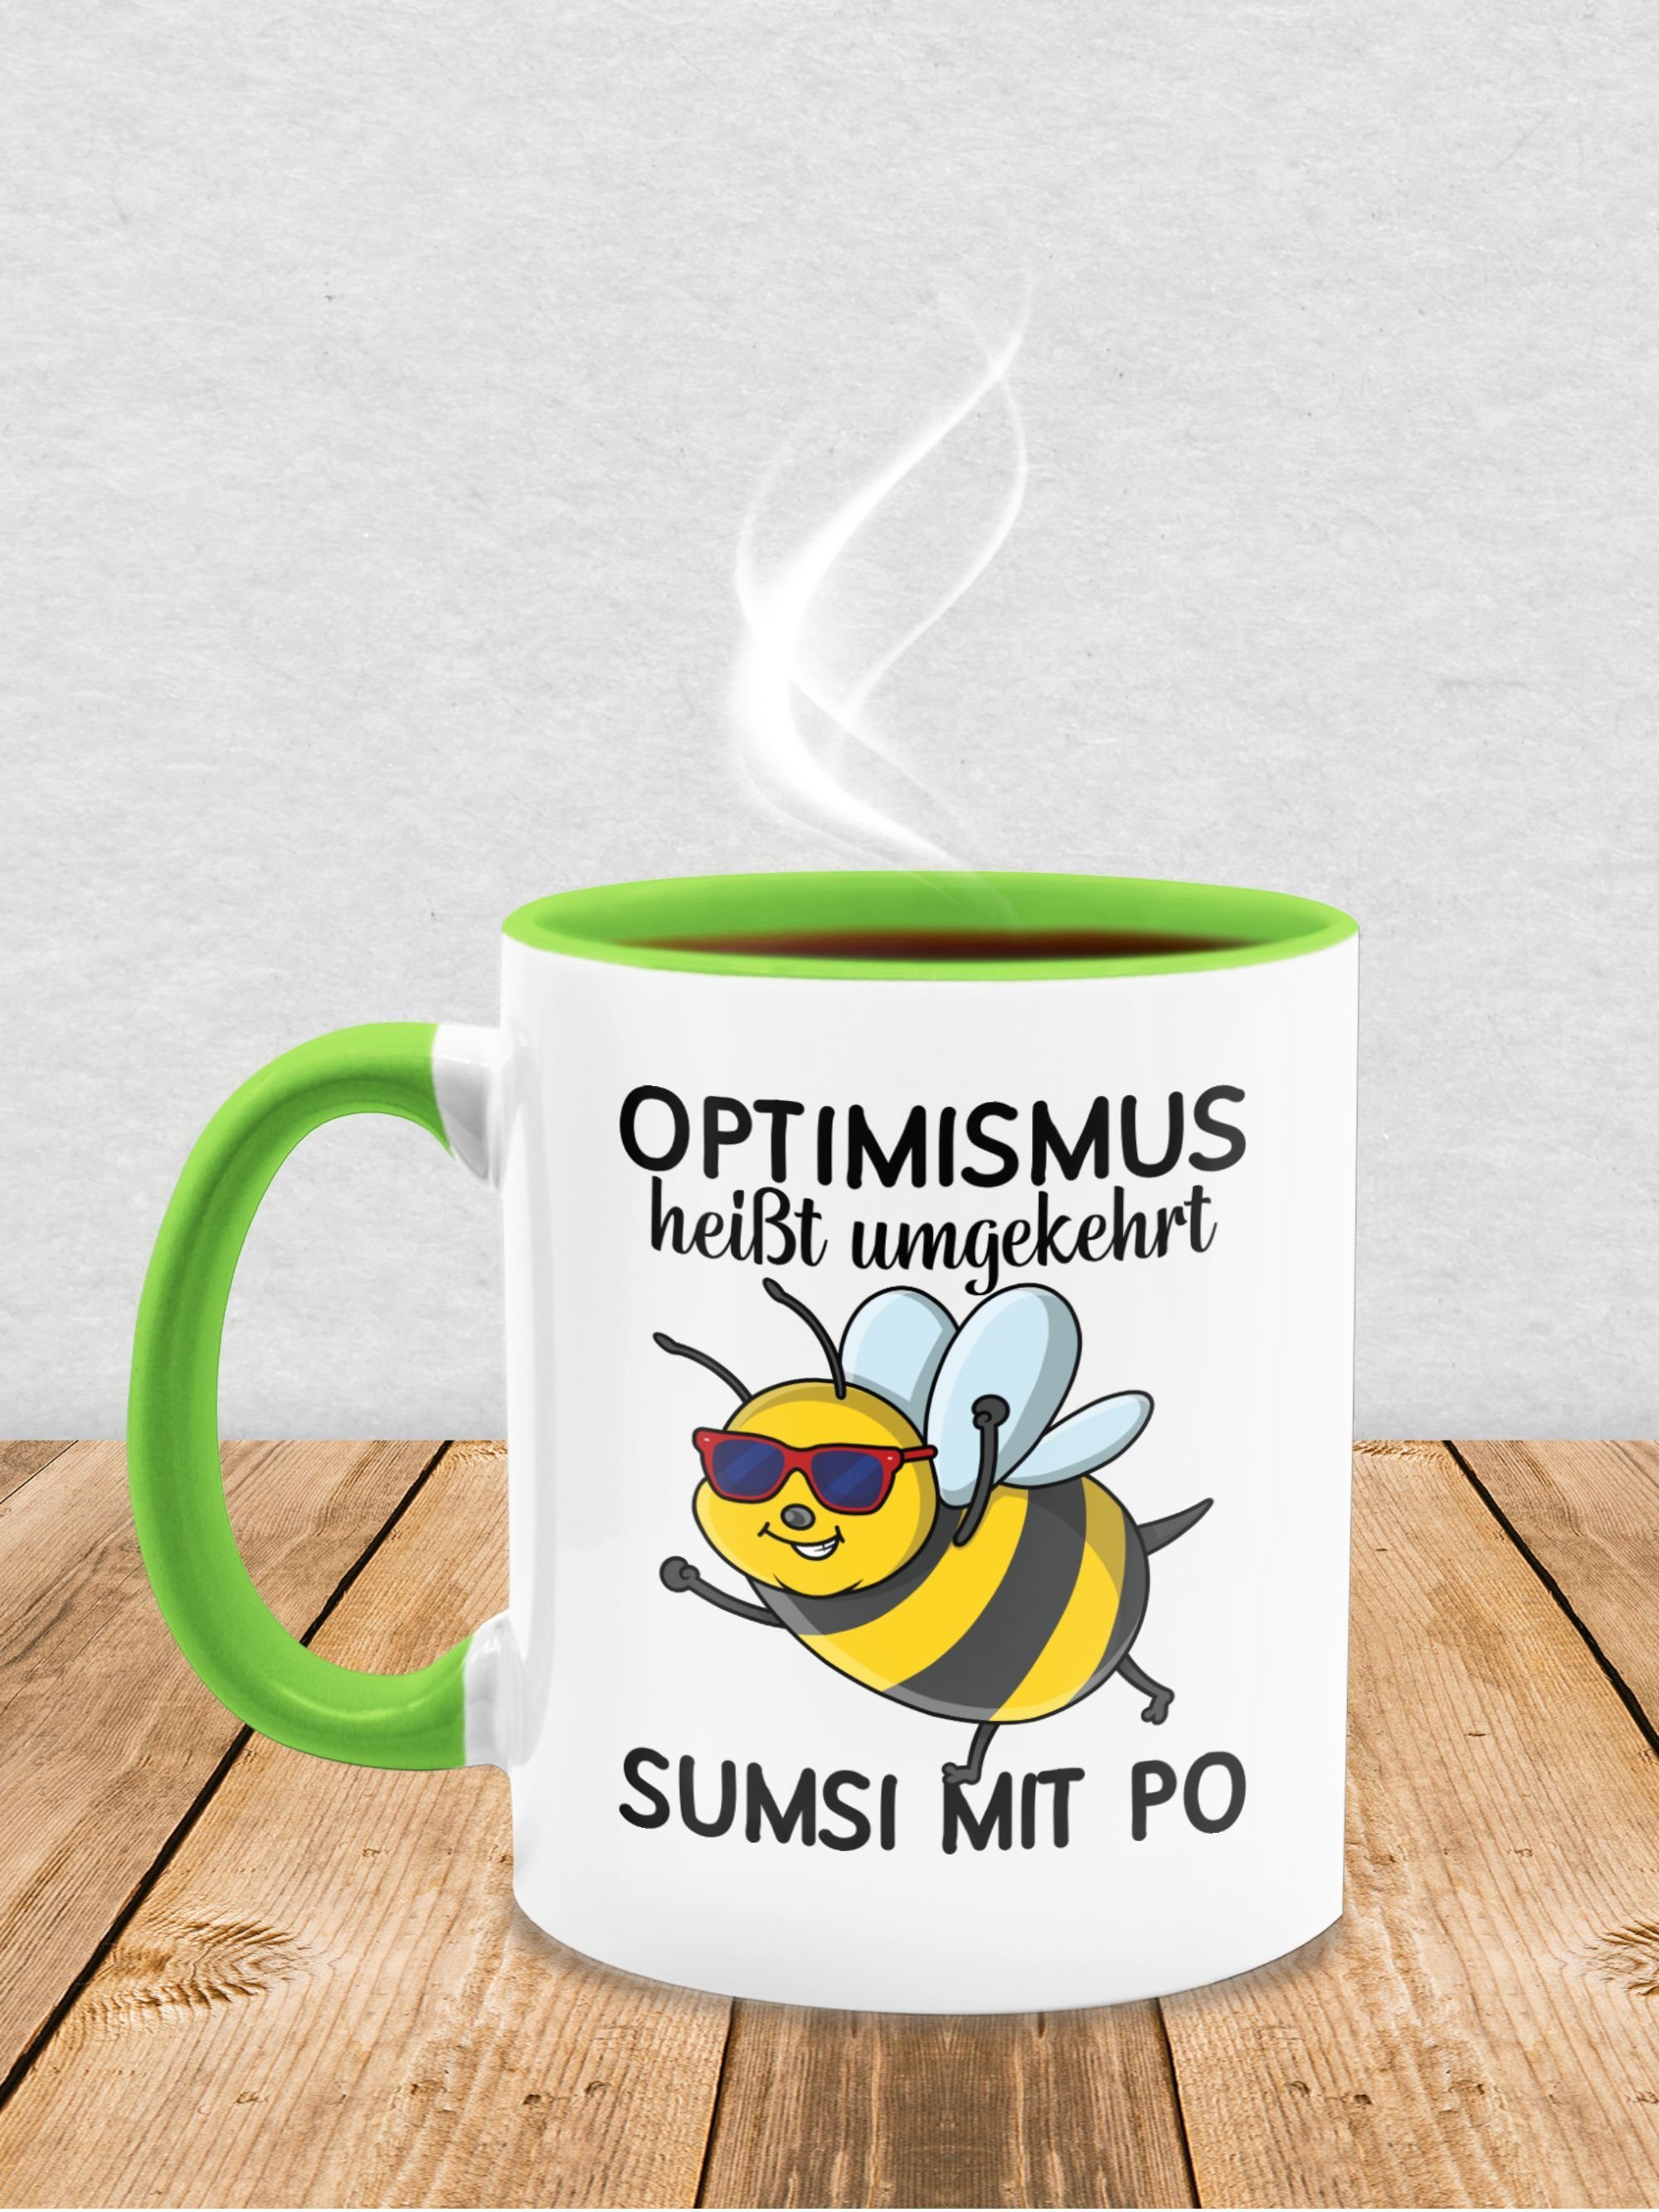 1 Shirtracer Büro I Po Tasse Arbeitskollegen, mit Hellgrün Statement heißt Optimismus Keramik, umgekehrt Sumsi